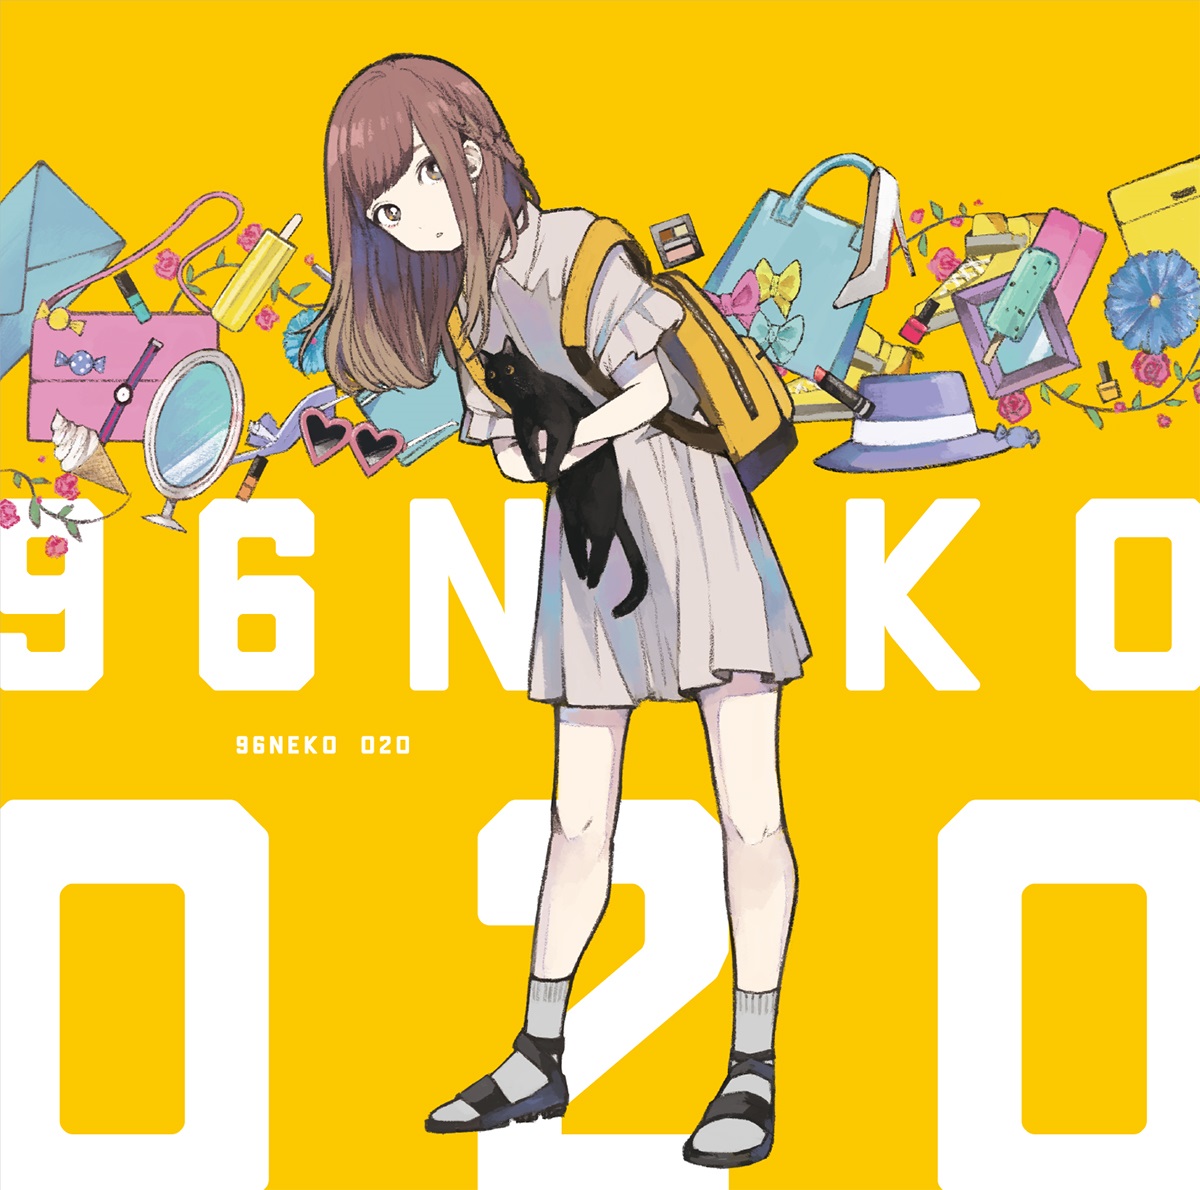 96neko — Primitive emotion cover artwork